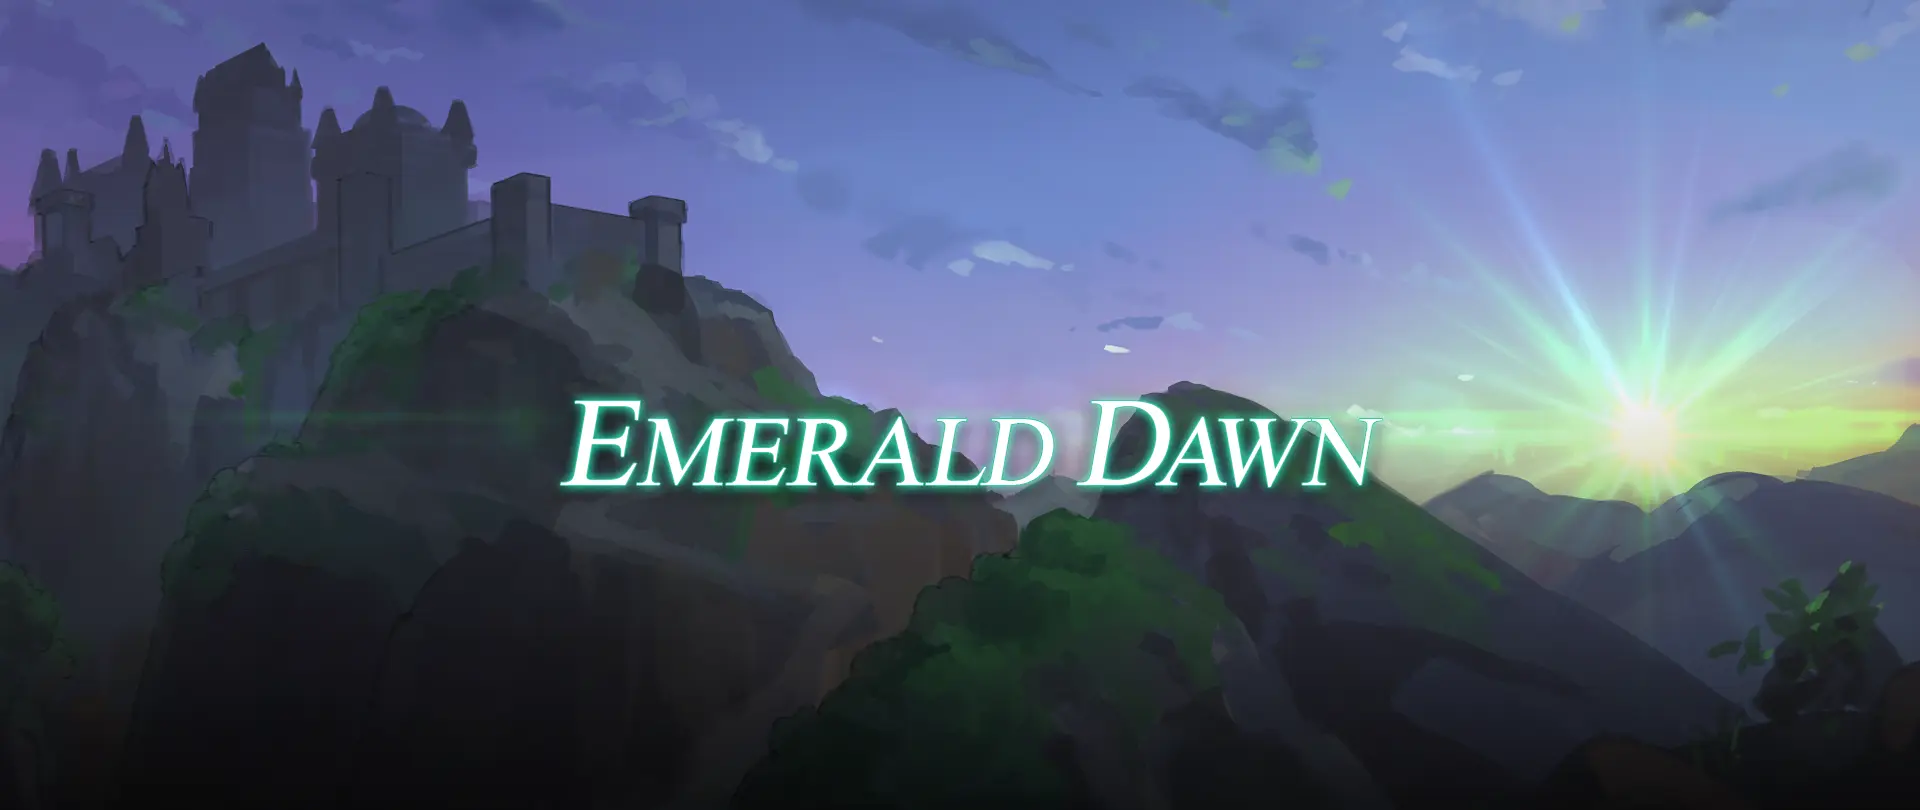 Emerald Dawn main image